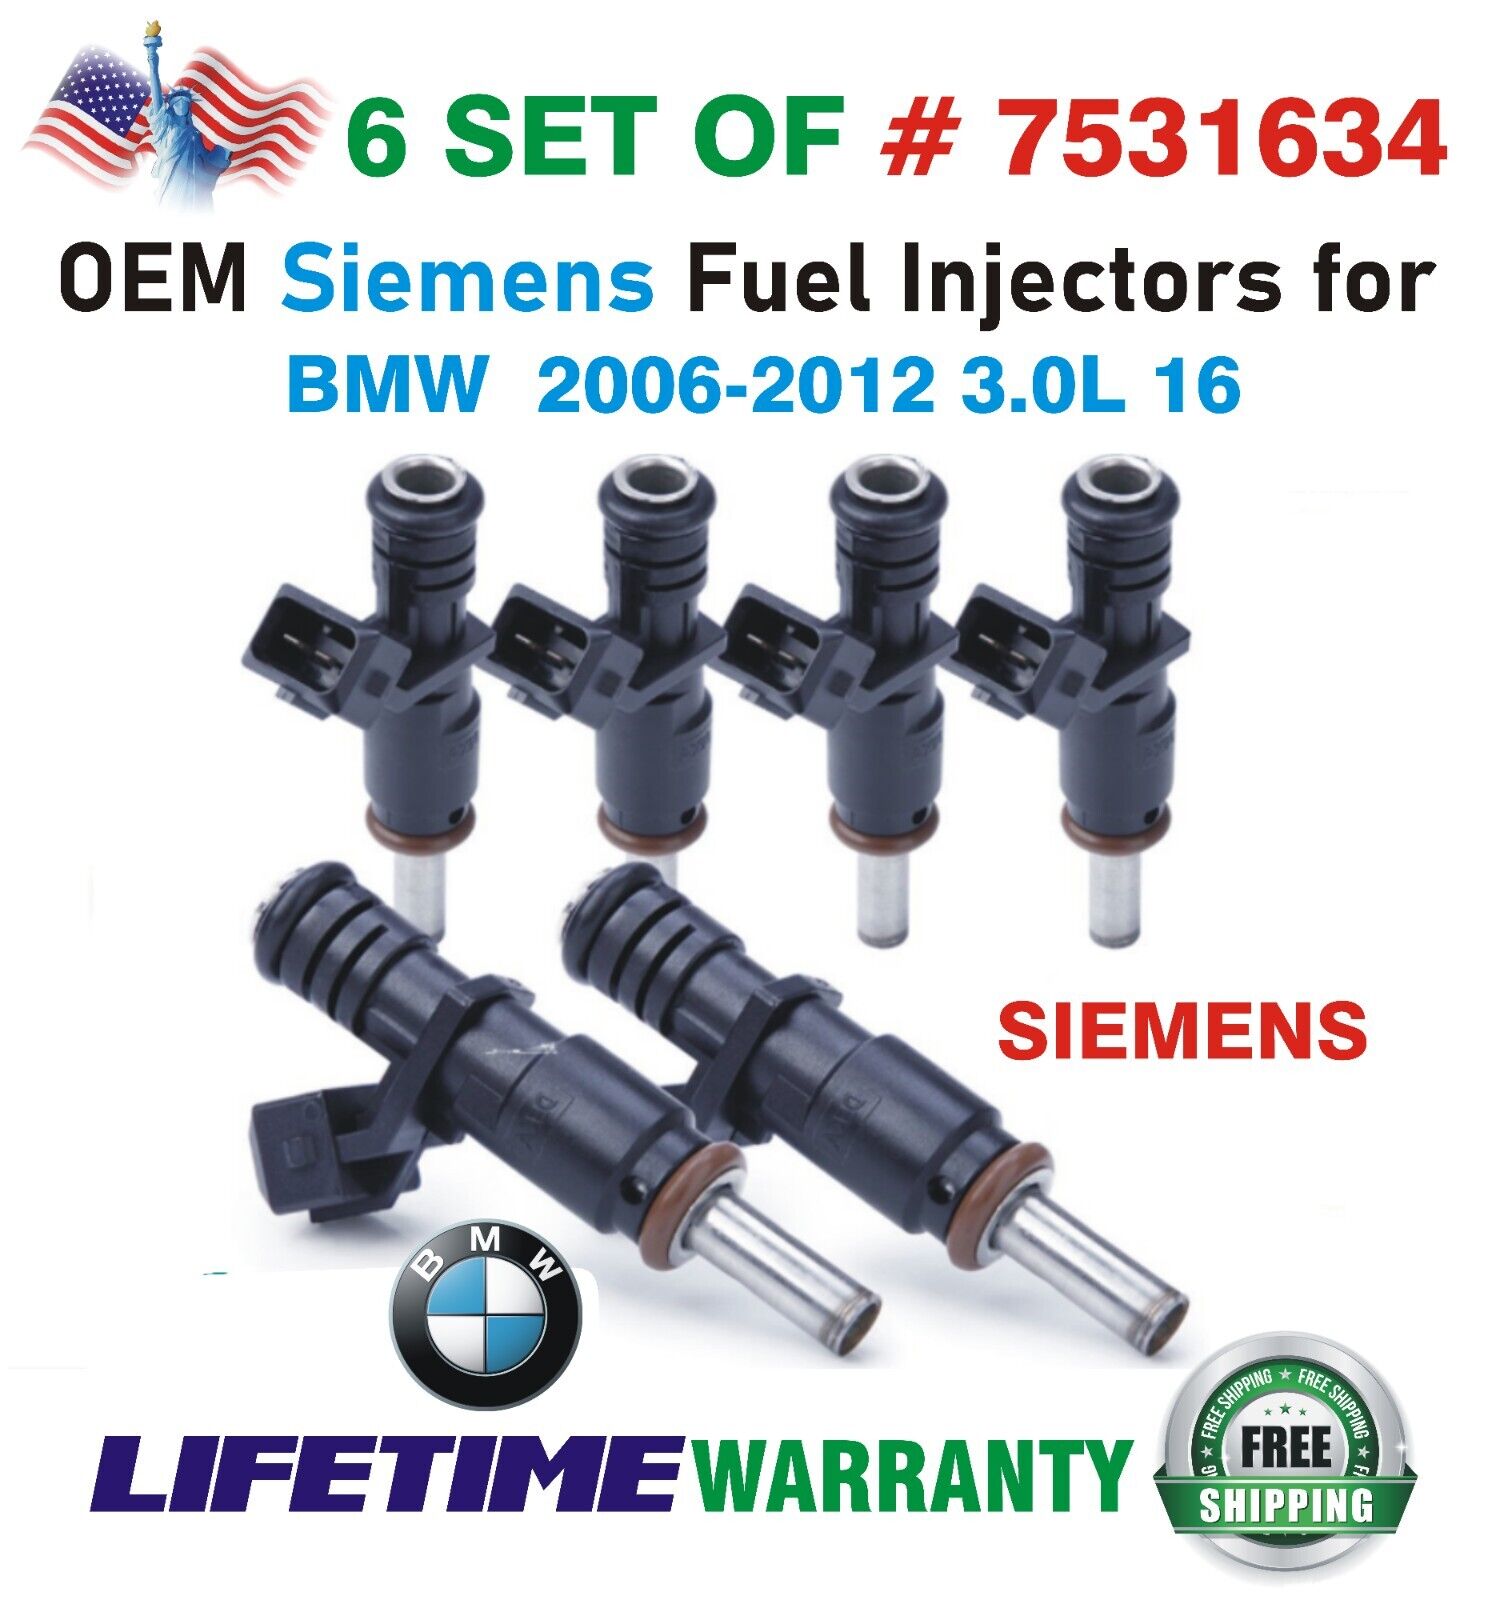 Genuine Siemens Set of 6 Fuel Injectors for 2006-2012 BMW 3.0L I6 #7531634